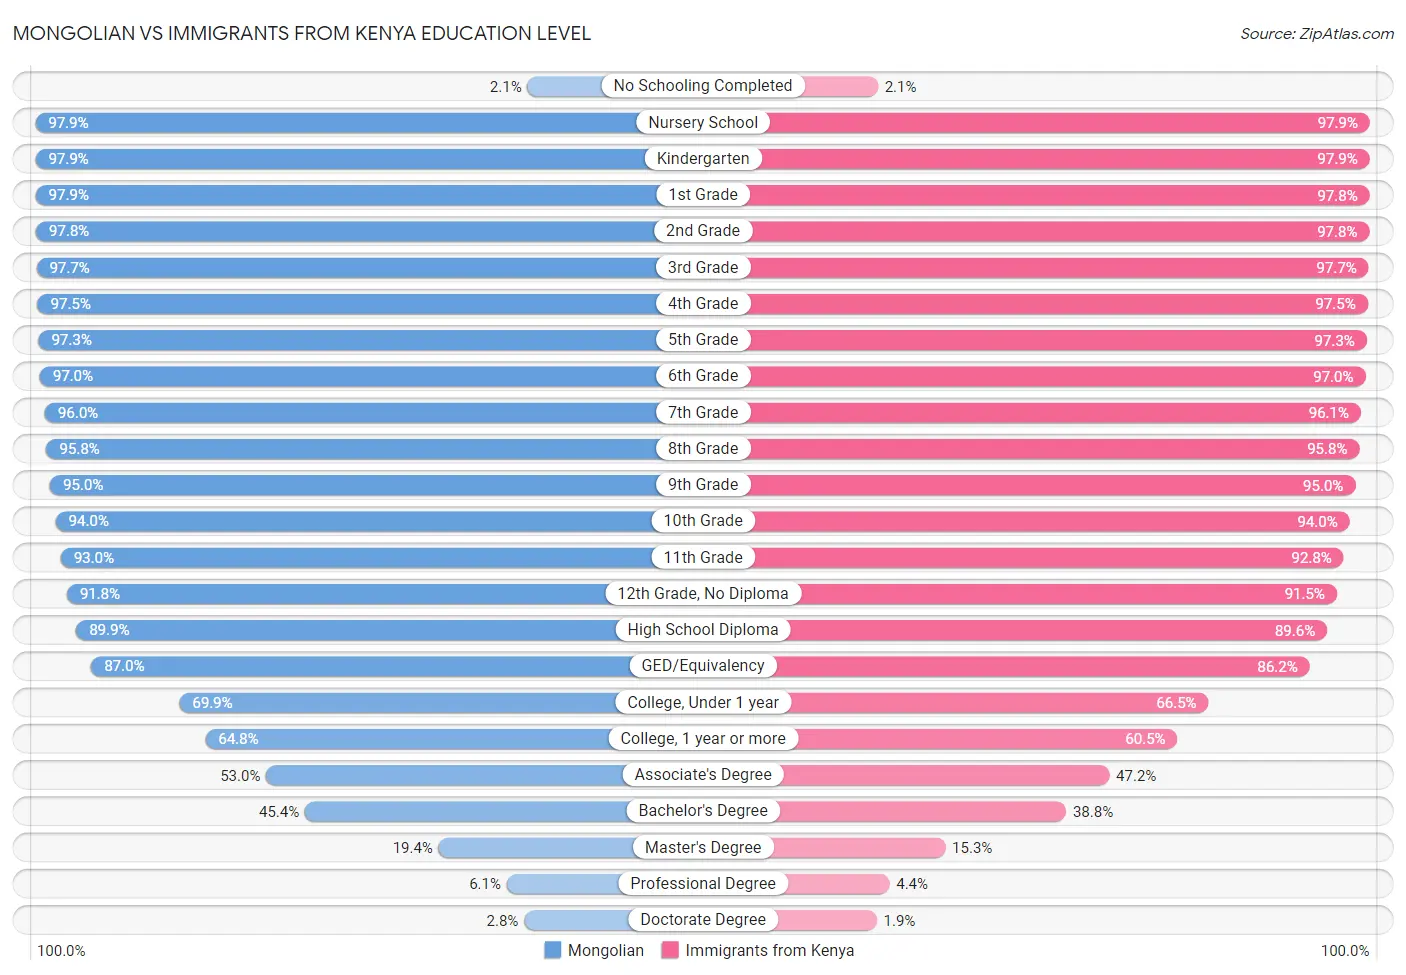 Mongolian vs Immigrants from Kenya Education Level